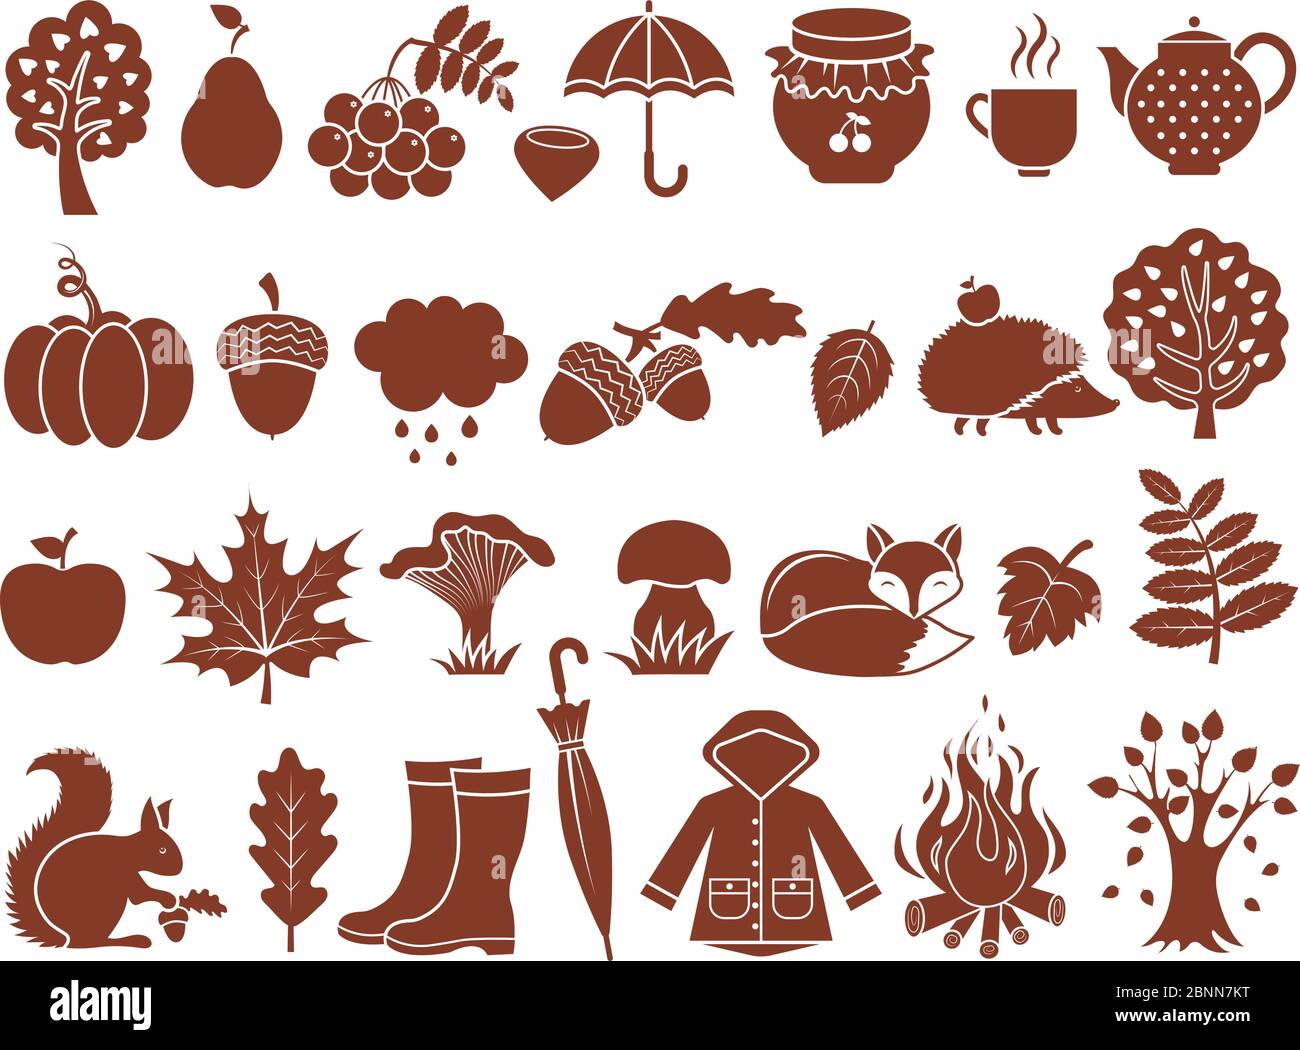 Silhouette of autumn symbols. Monochrome icons set of autumn Stock Vector